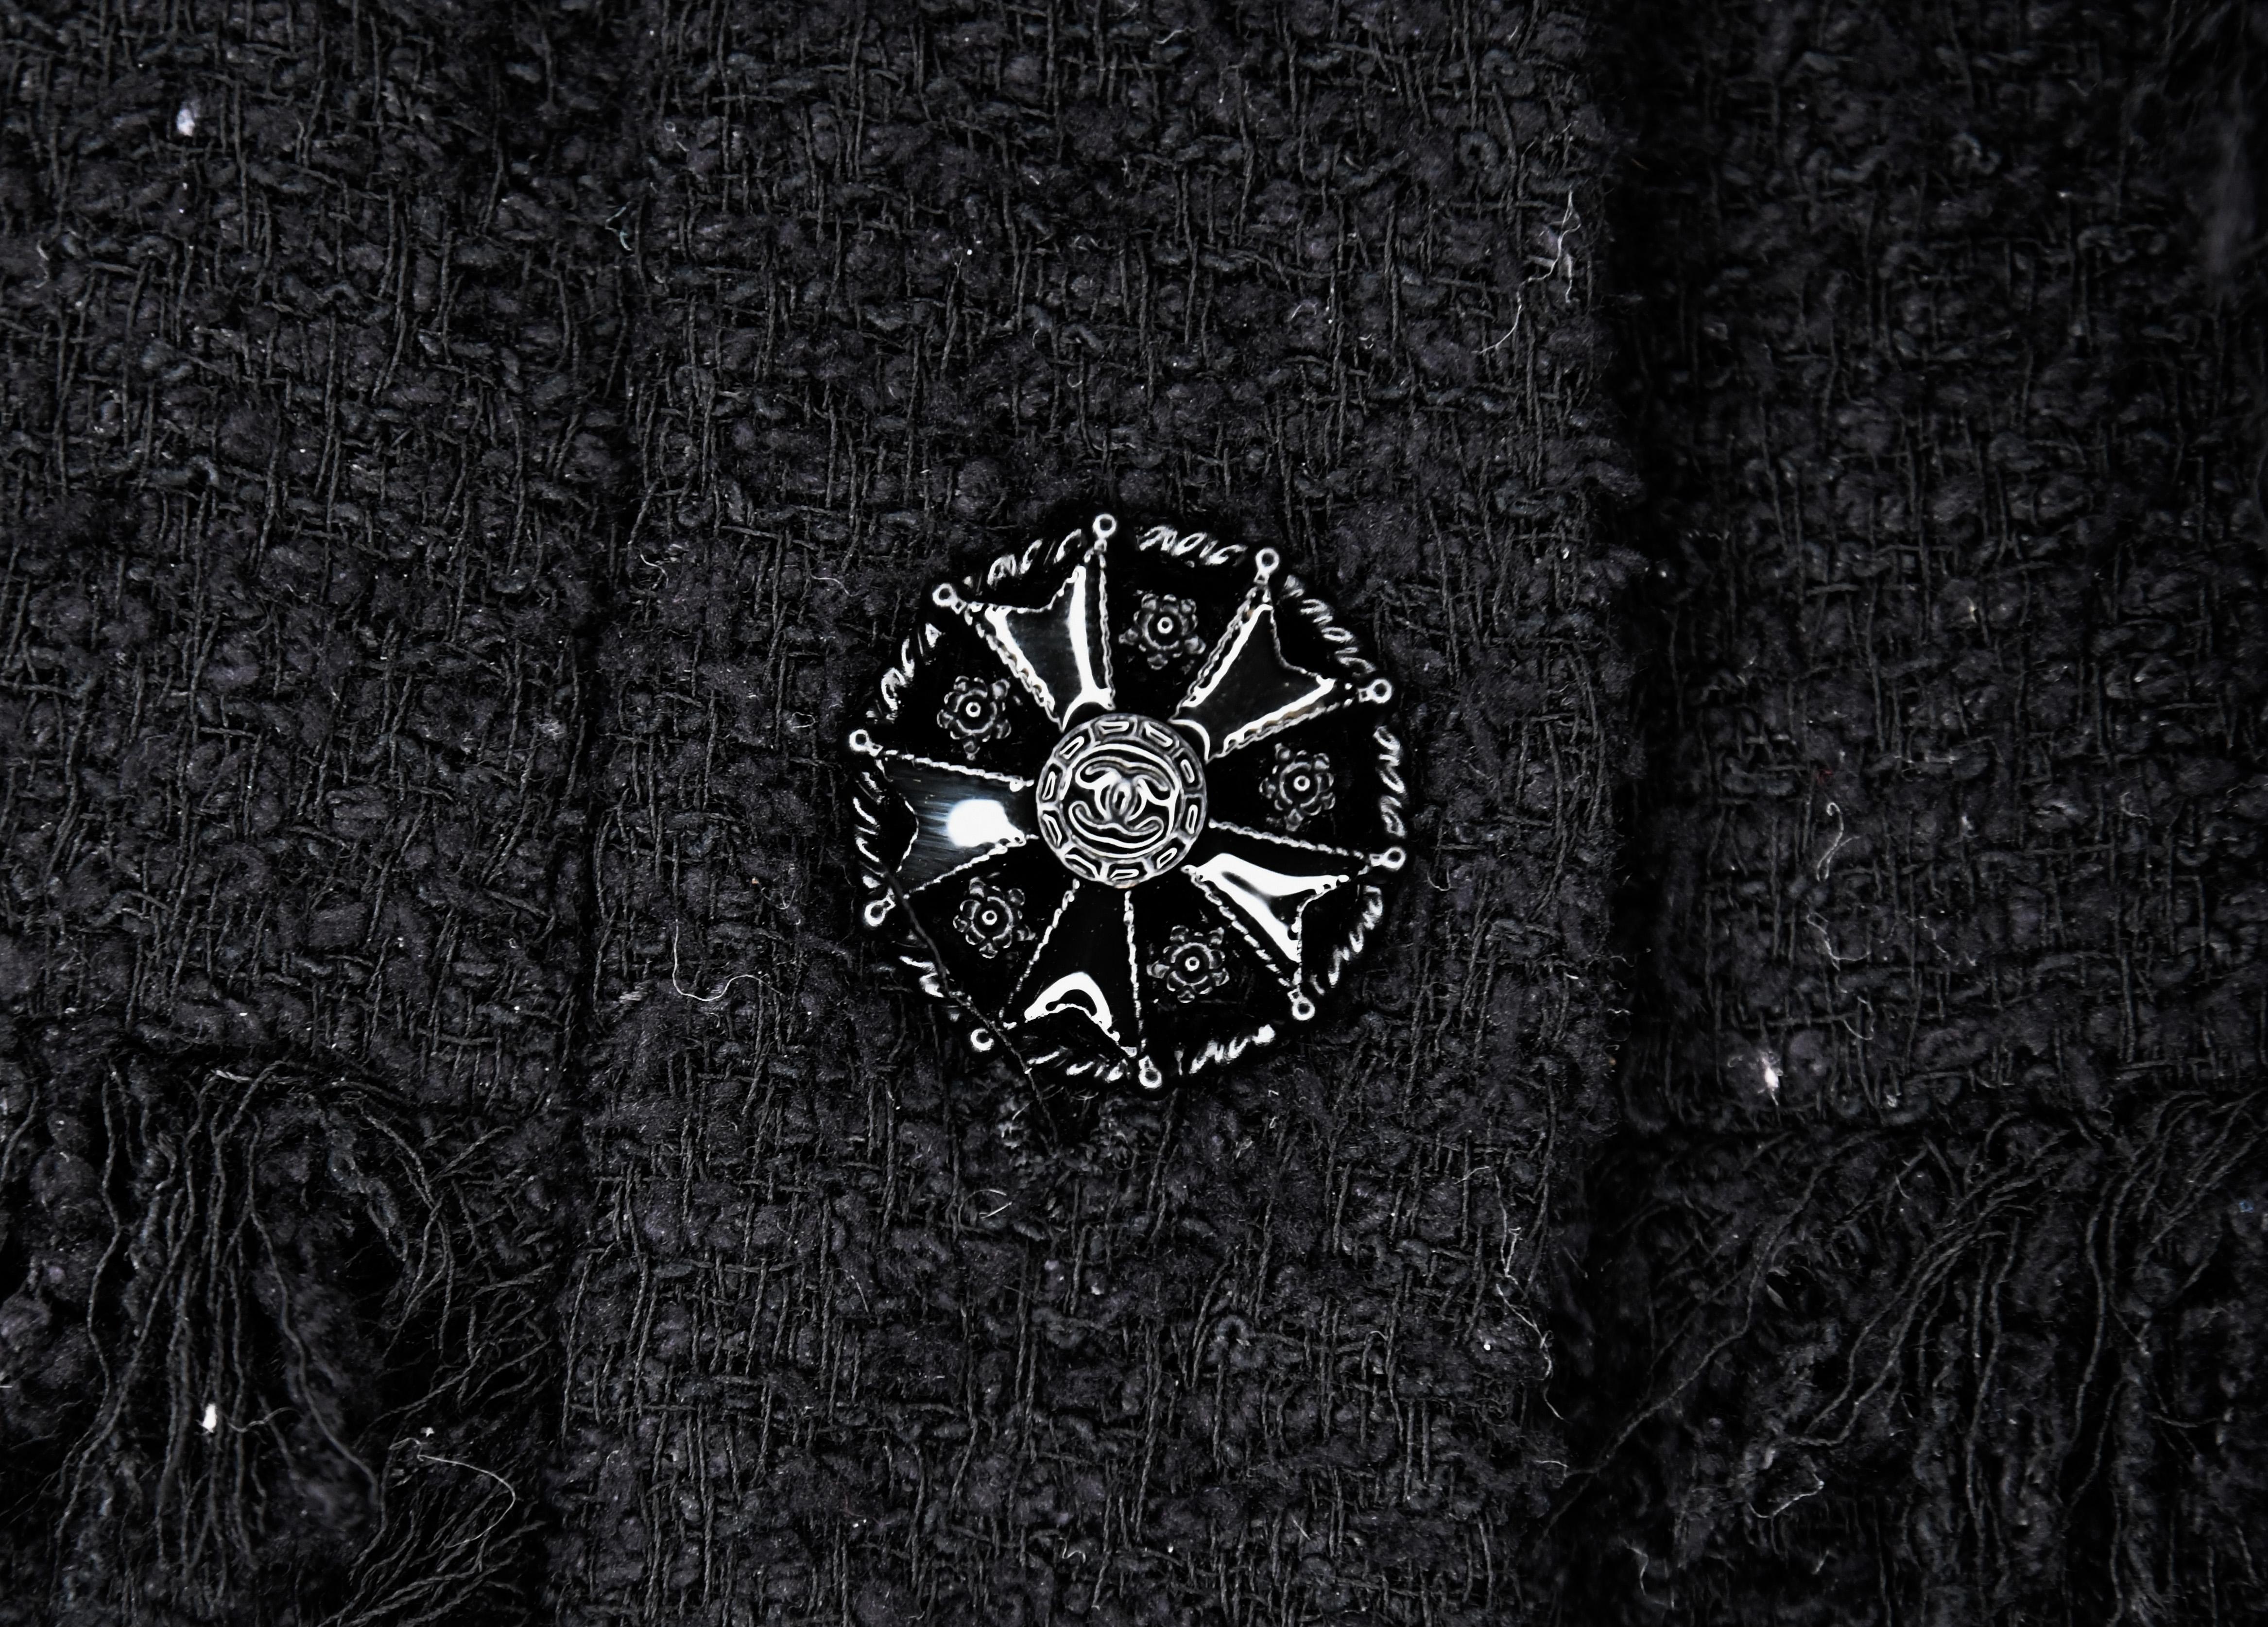 Chanel Black Tweed Top with Jacket Overlay 2008 Runway Collection 44 1